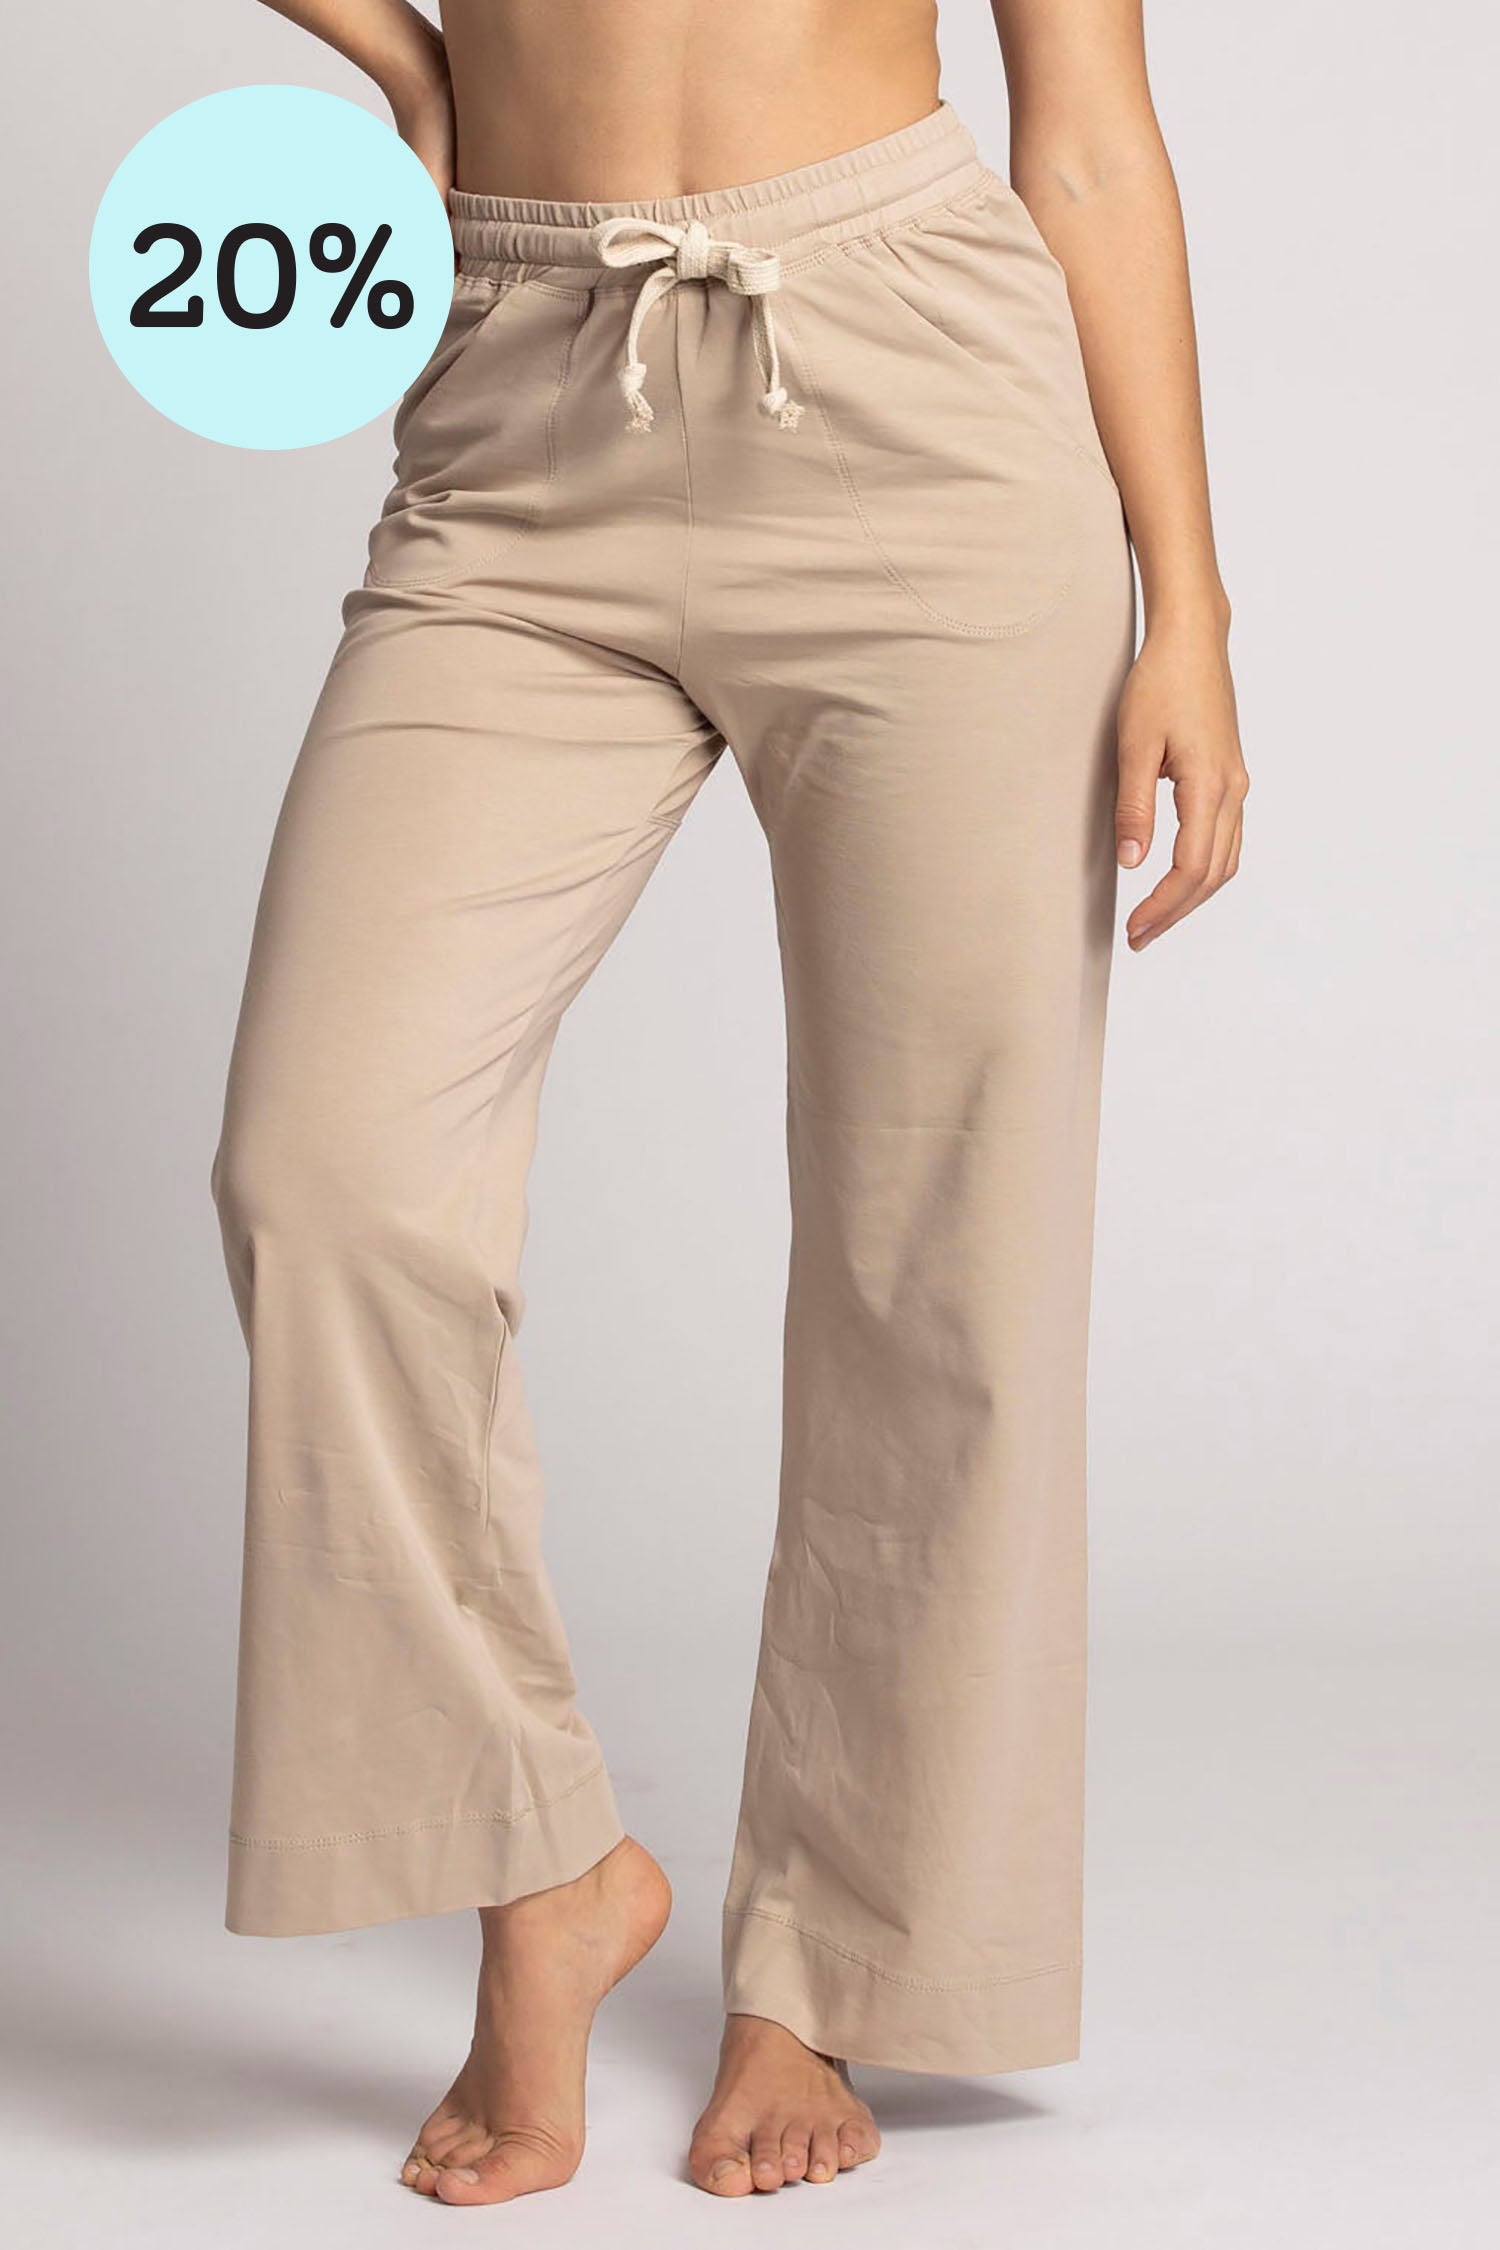 Lightweight Cotton Linen Pants Women Summer Lounge Pajama Pants Drawstring  Sweatpants Cozy Aerobics Exercise Pants - Walmart.com